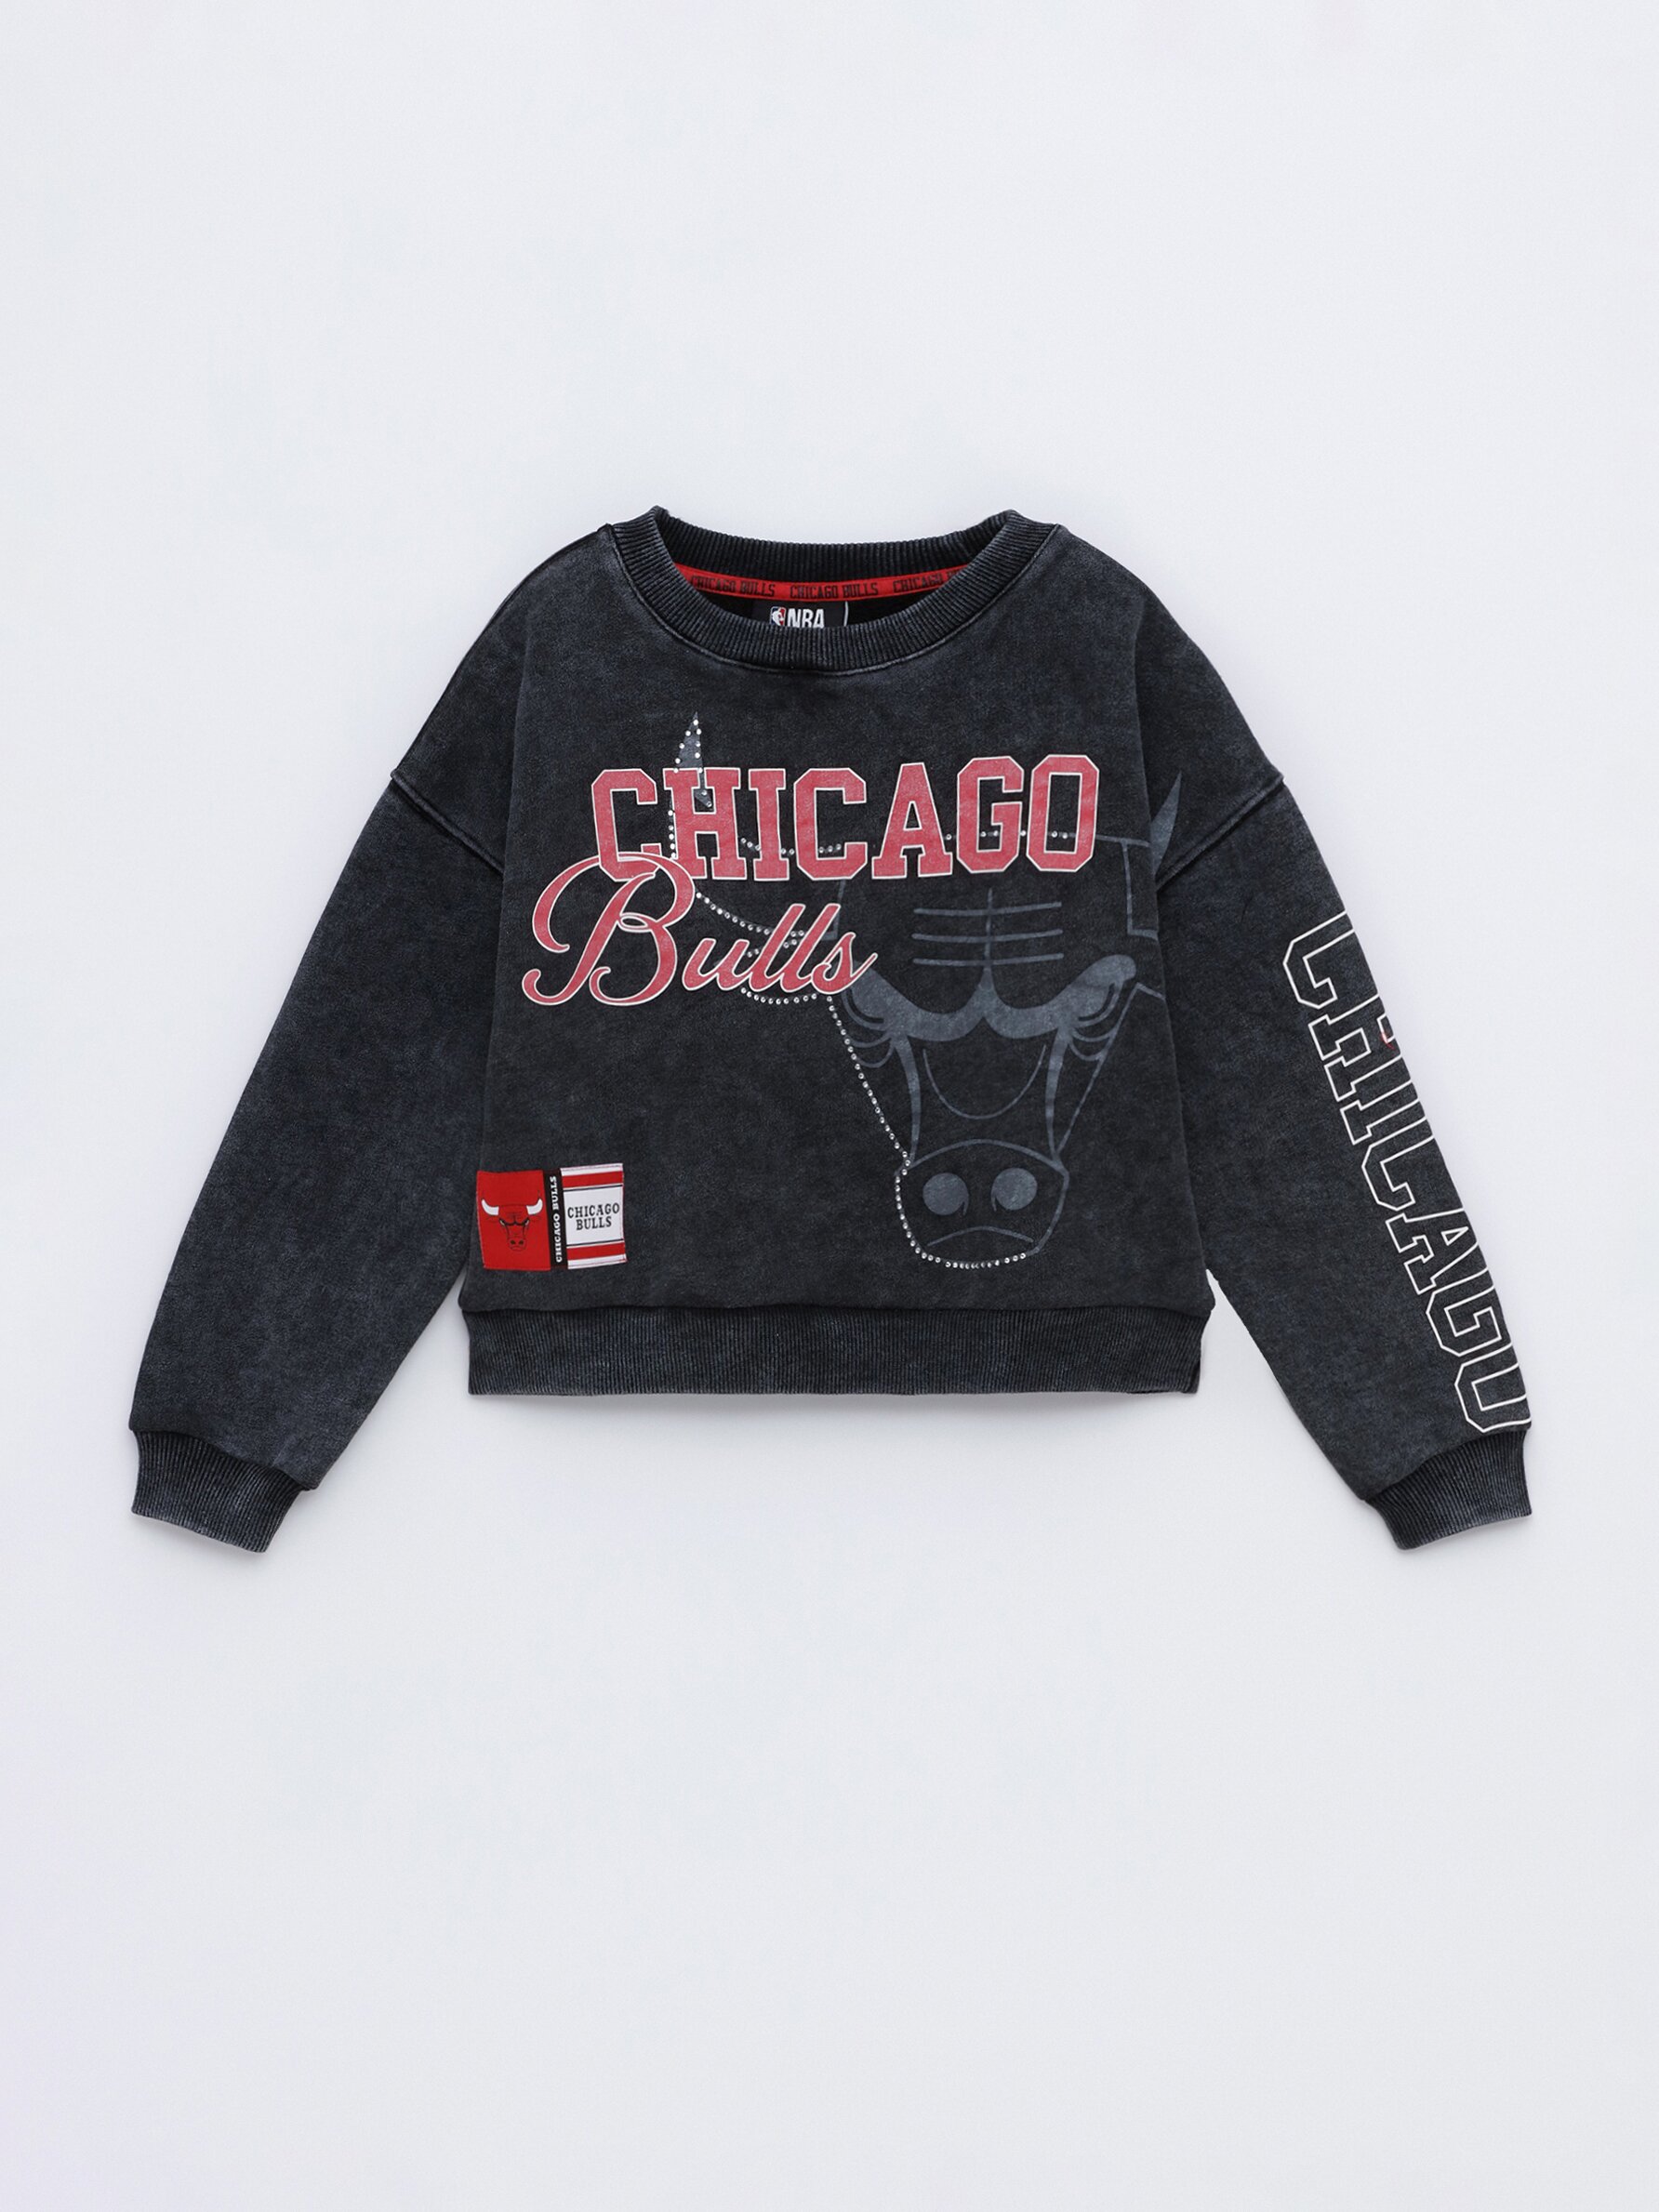 chicago bulls grey sweatshirt